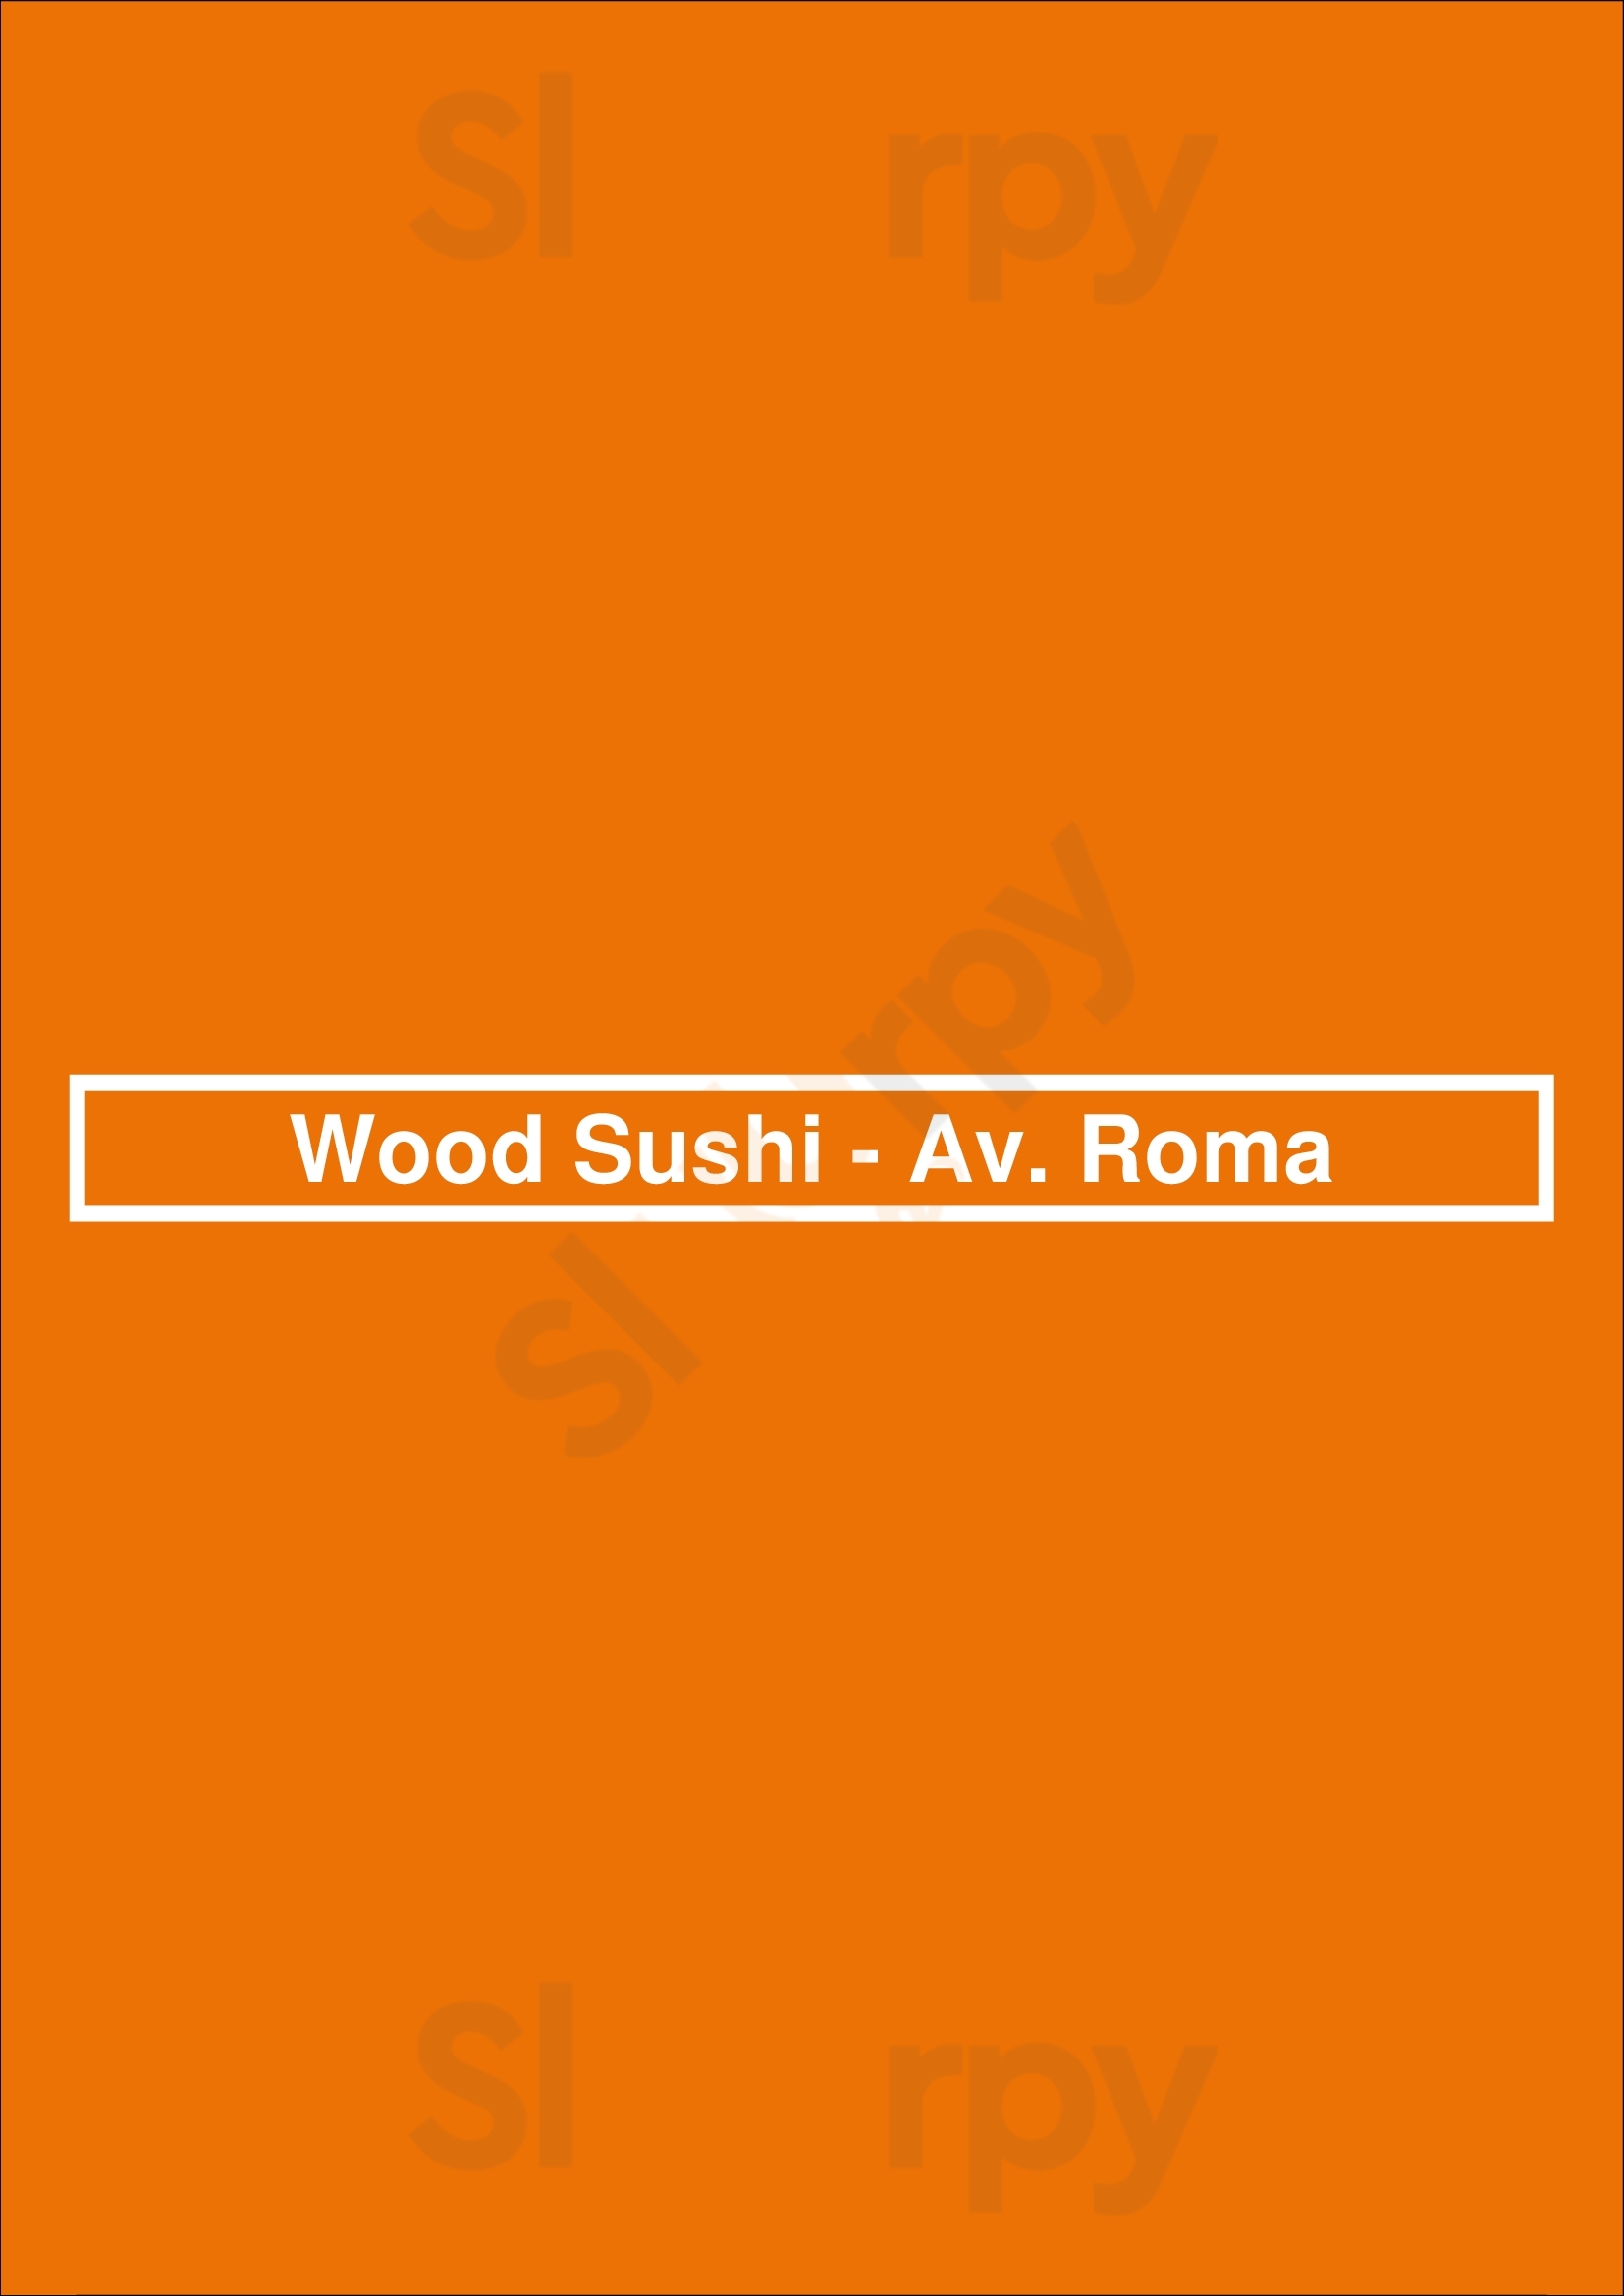 Wood Sushi - Av. Roma Lisboa Menu - 1